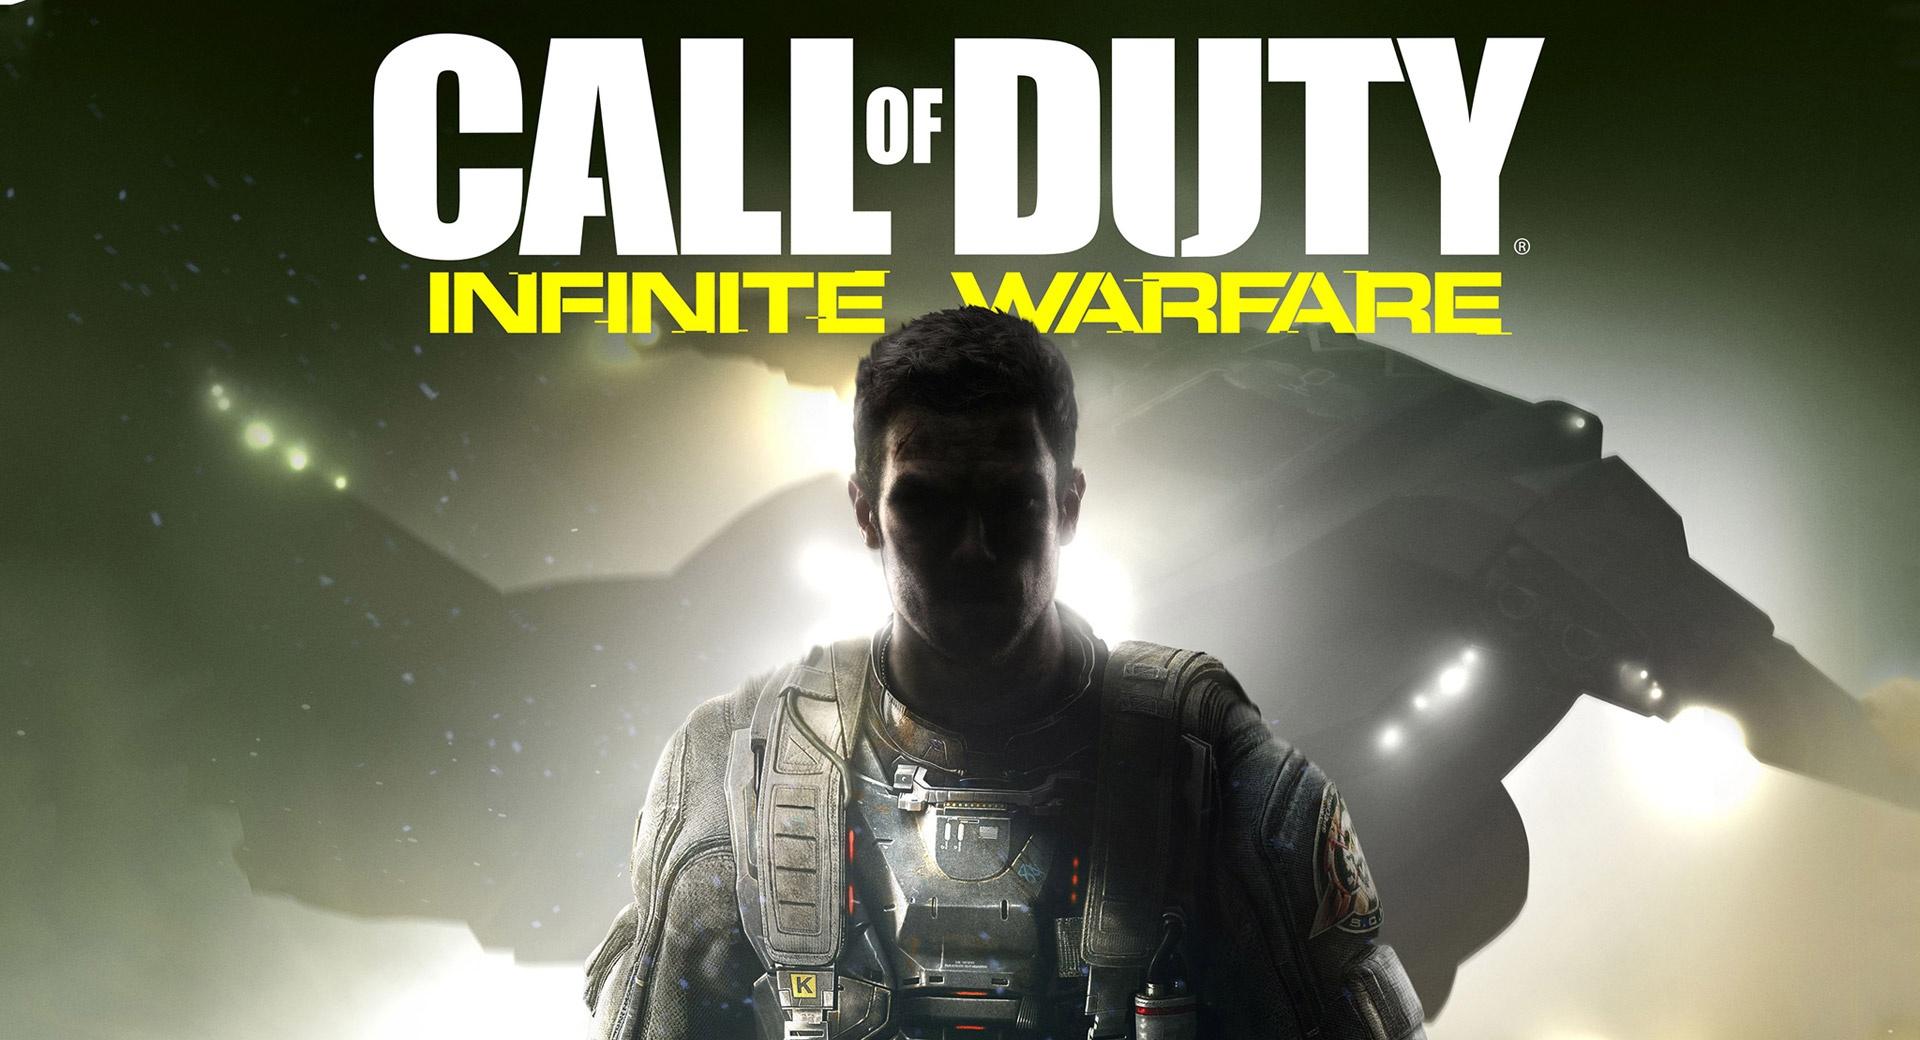 Call Of Duty Infinite Warfare Keyart at 1024 x 1024 iPad size wallpapers HD quality